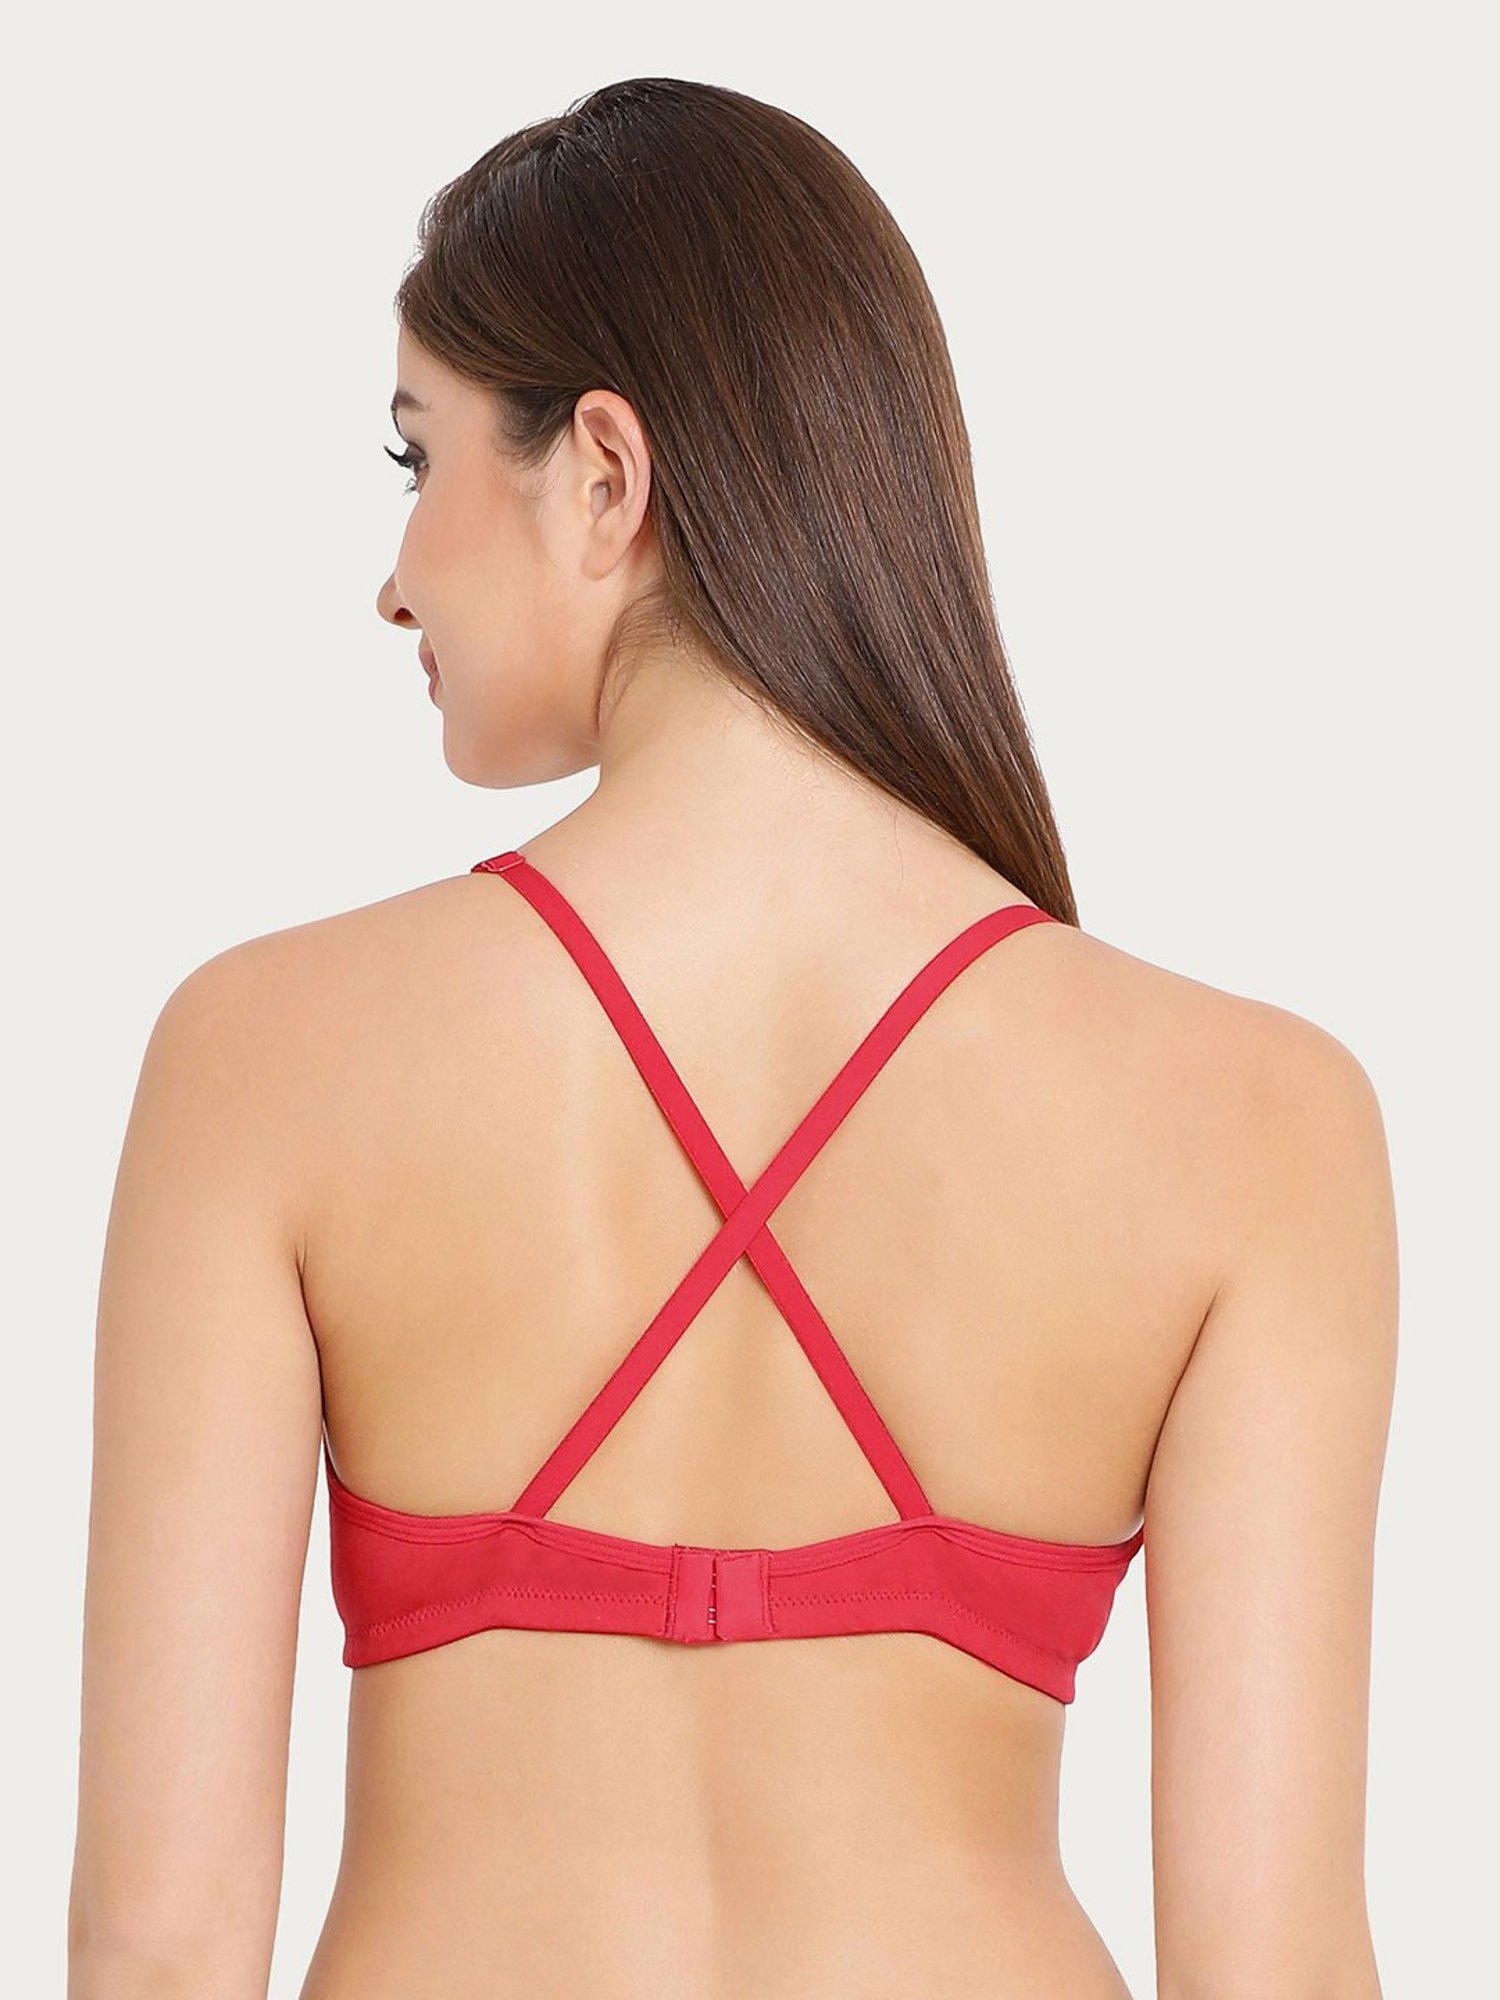 Buy Clovia Red Non Wired Padded T-Shirt Bra for Women Online @ Tata CLiQ